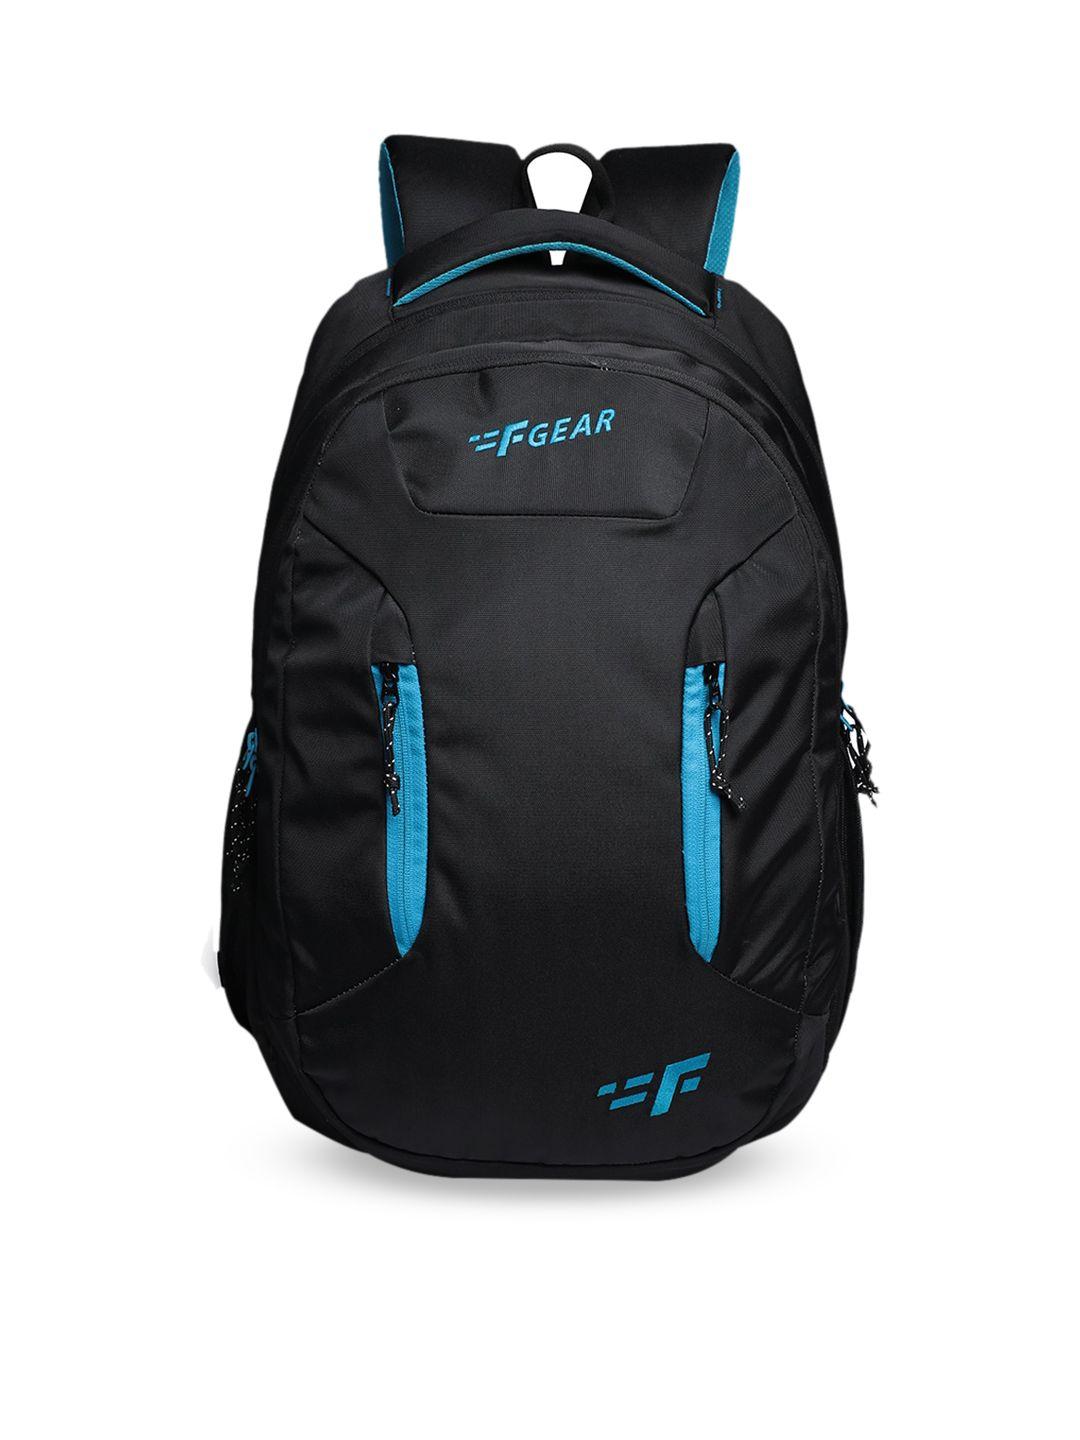 f gear unisex black & blue solid backpack